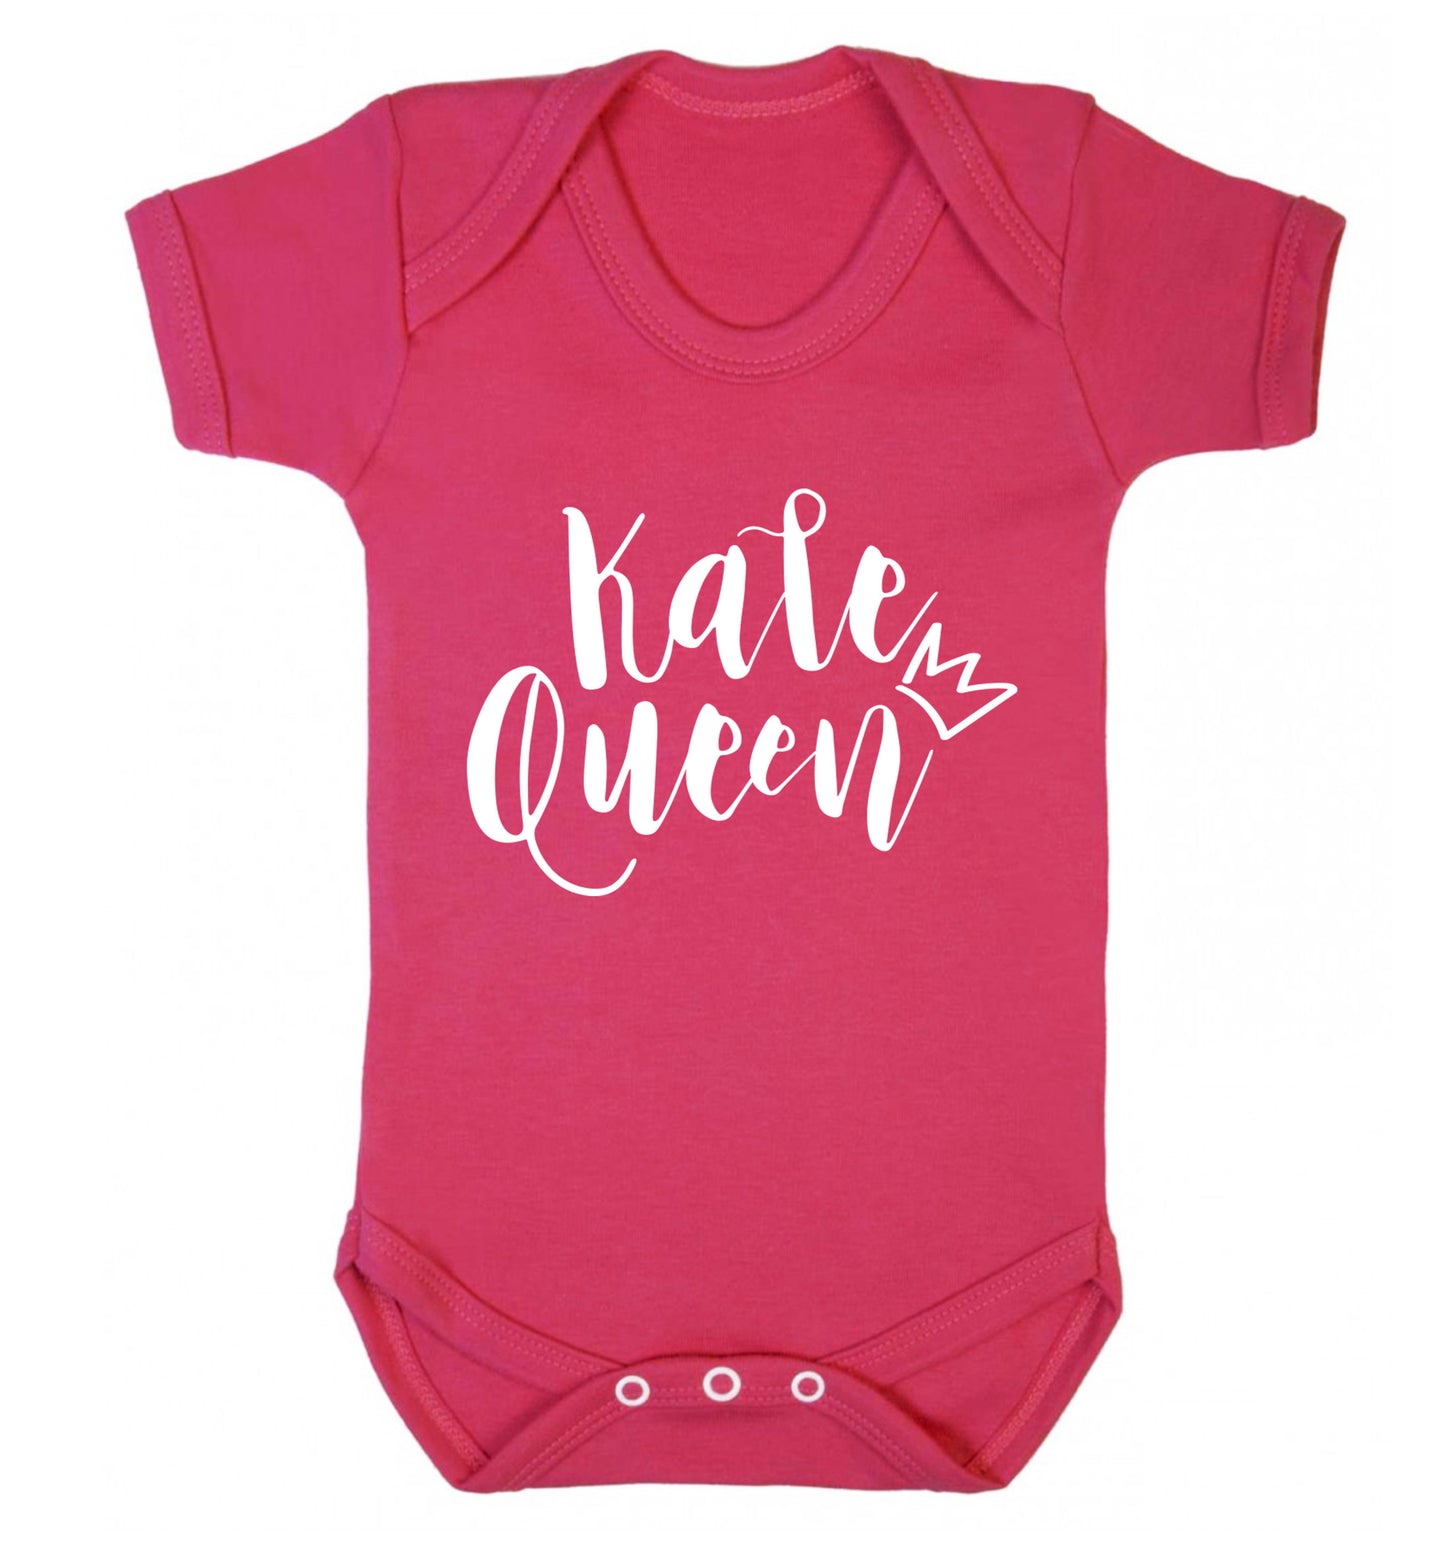 Kale Queen Baby Vest dark pink 18-24 months